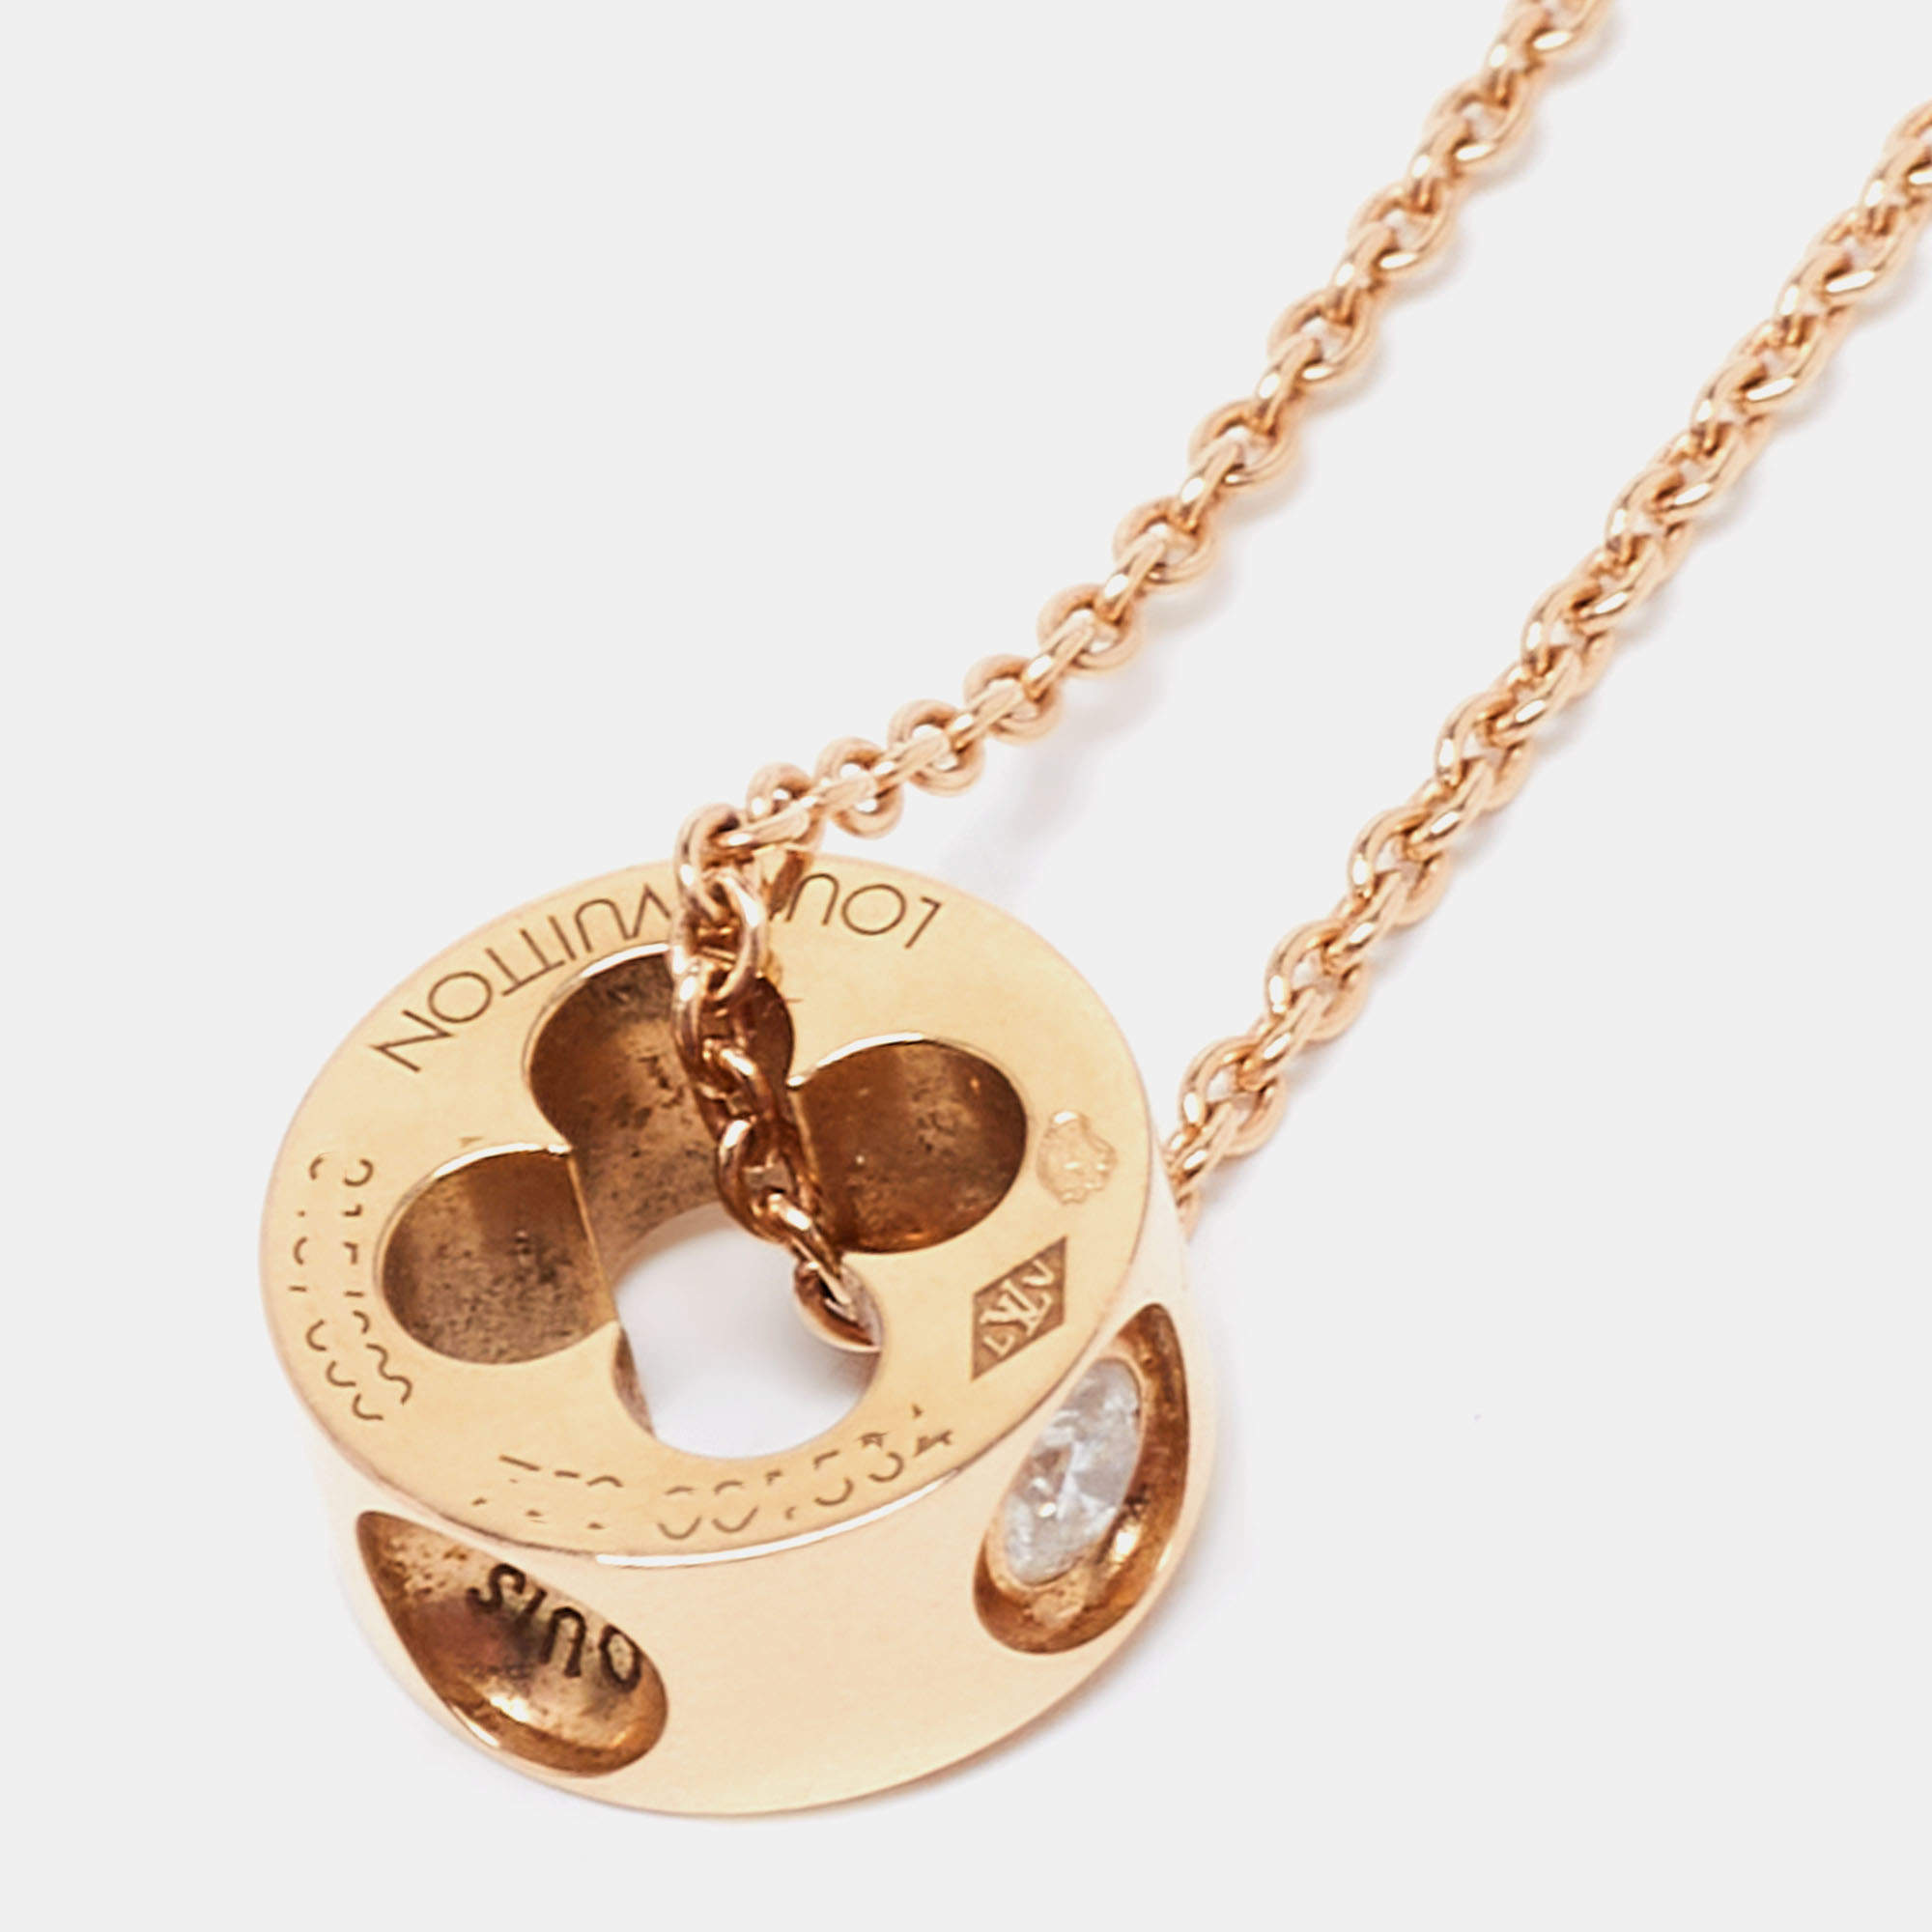 Louis Vuitton Empreinte Pendant Necklace 18K Rose Gold Rose gold 19136921